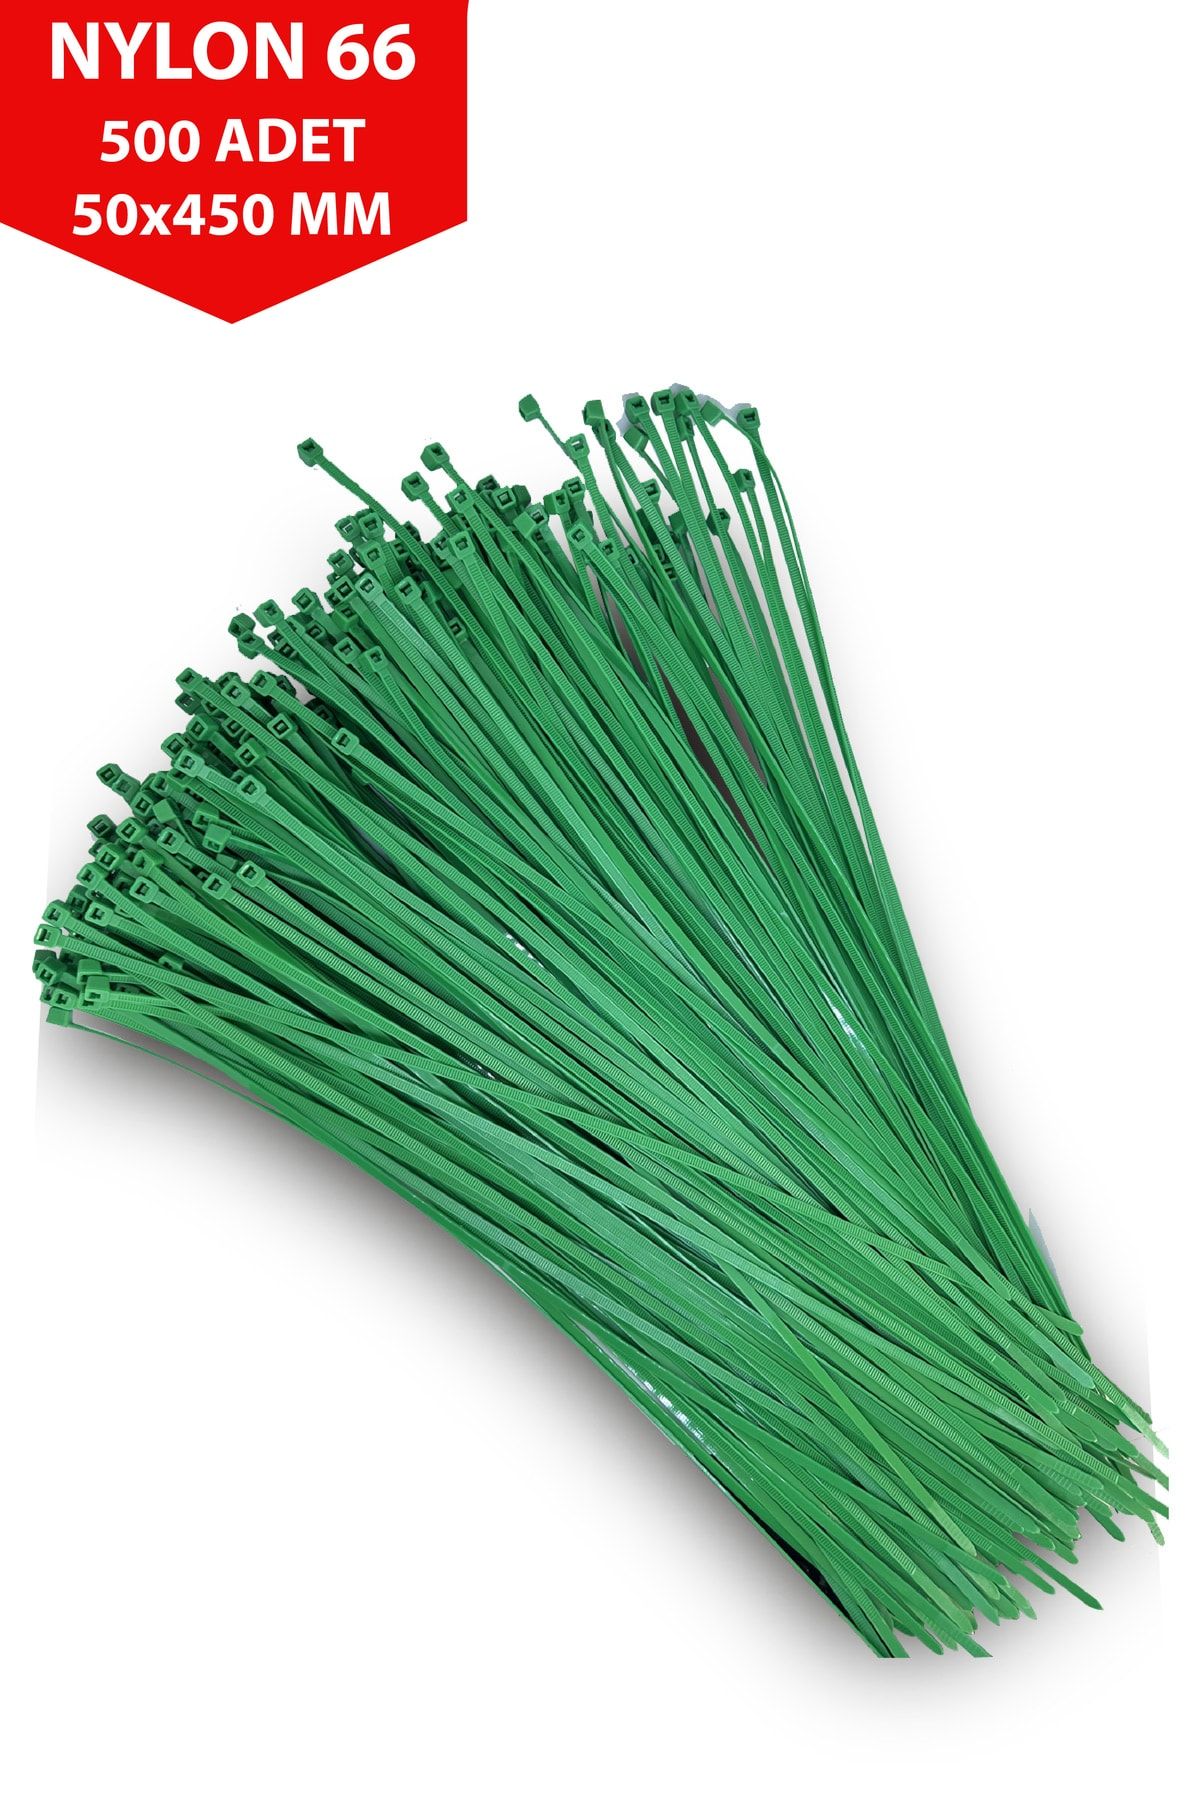 ATA HOME Plastik Kablobağı Nylon66 Kablo Klipsi Yeşil Cırt Kelepçe (5x450) 500 Adet